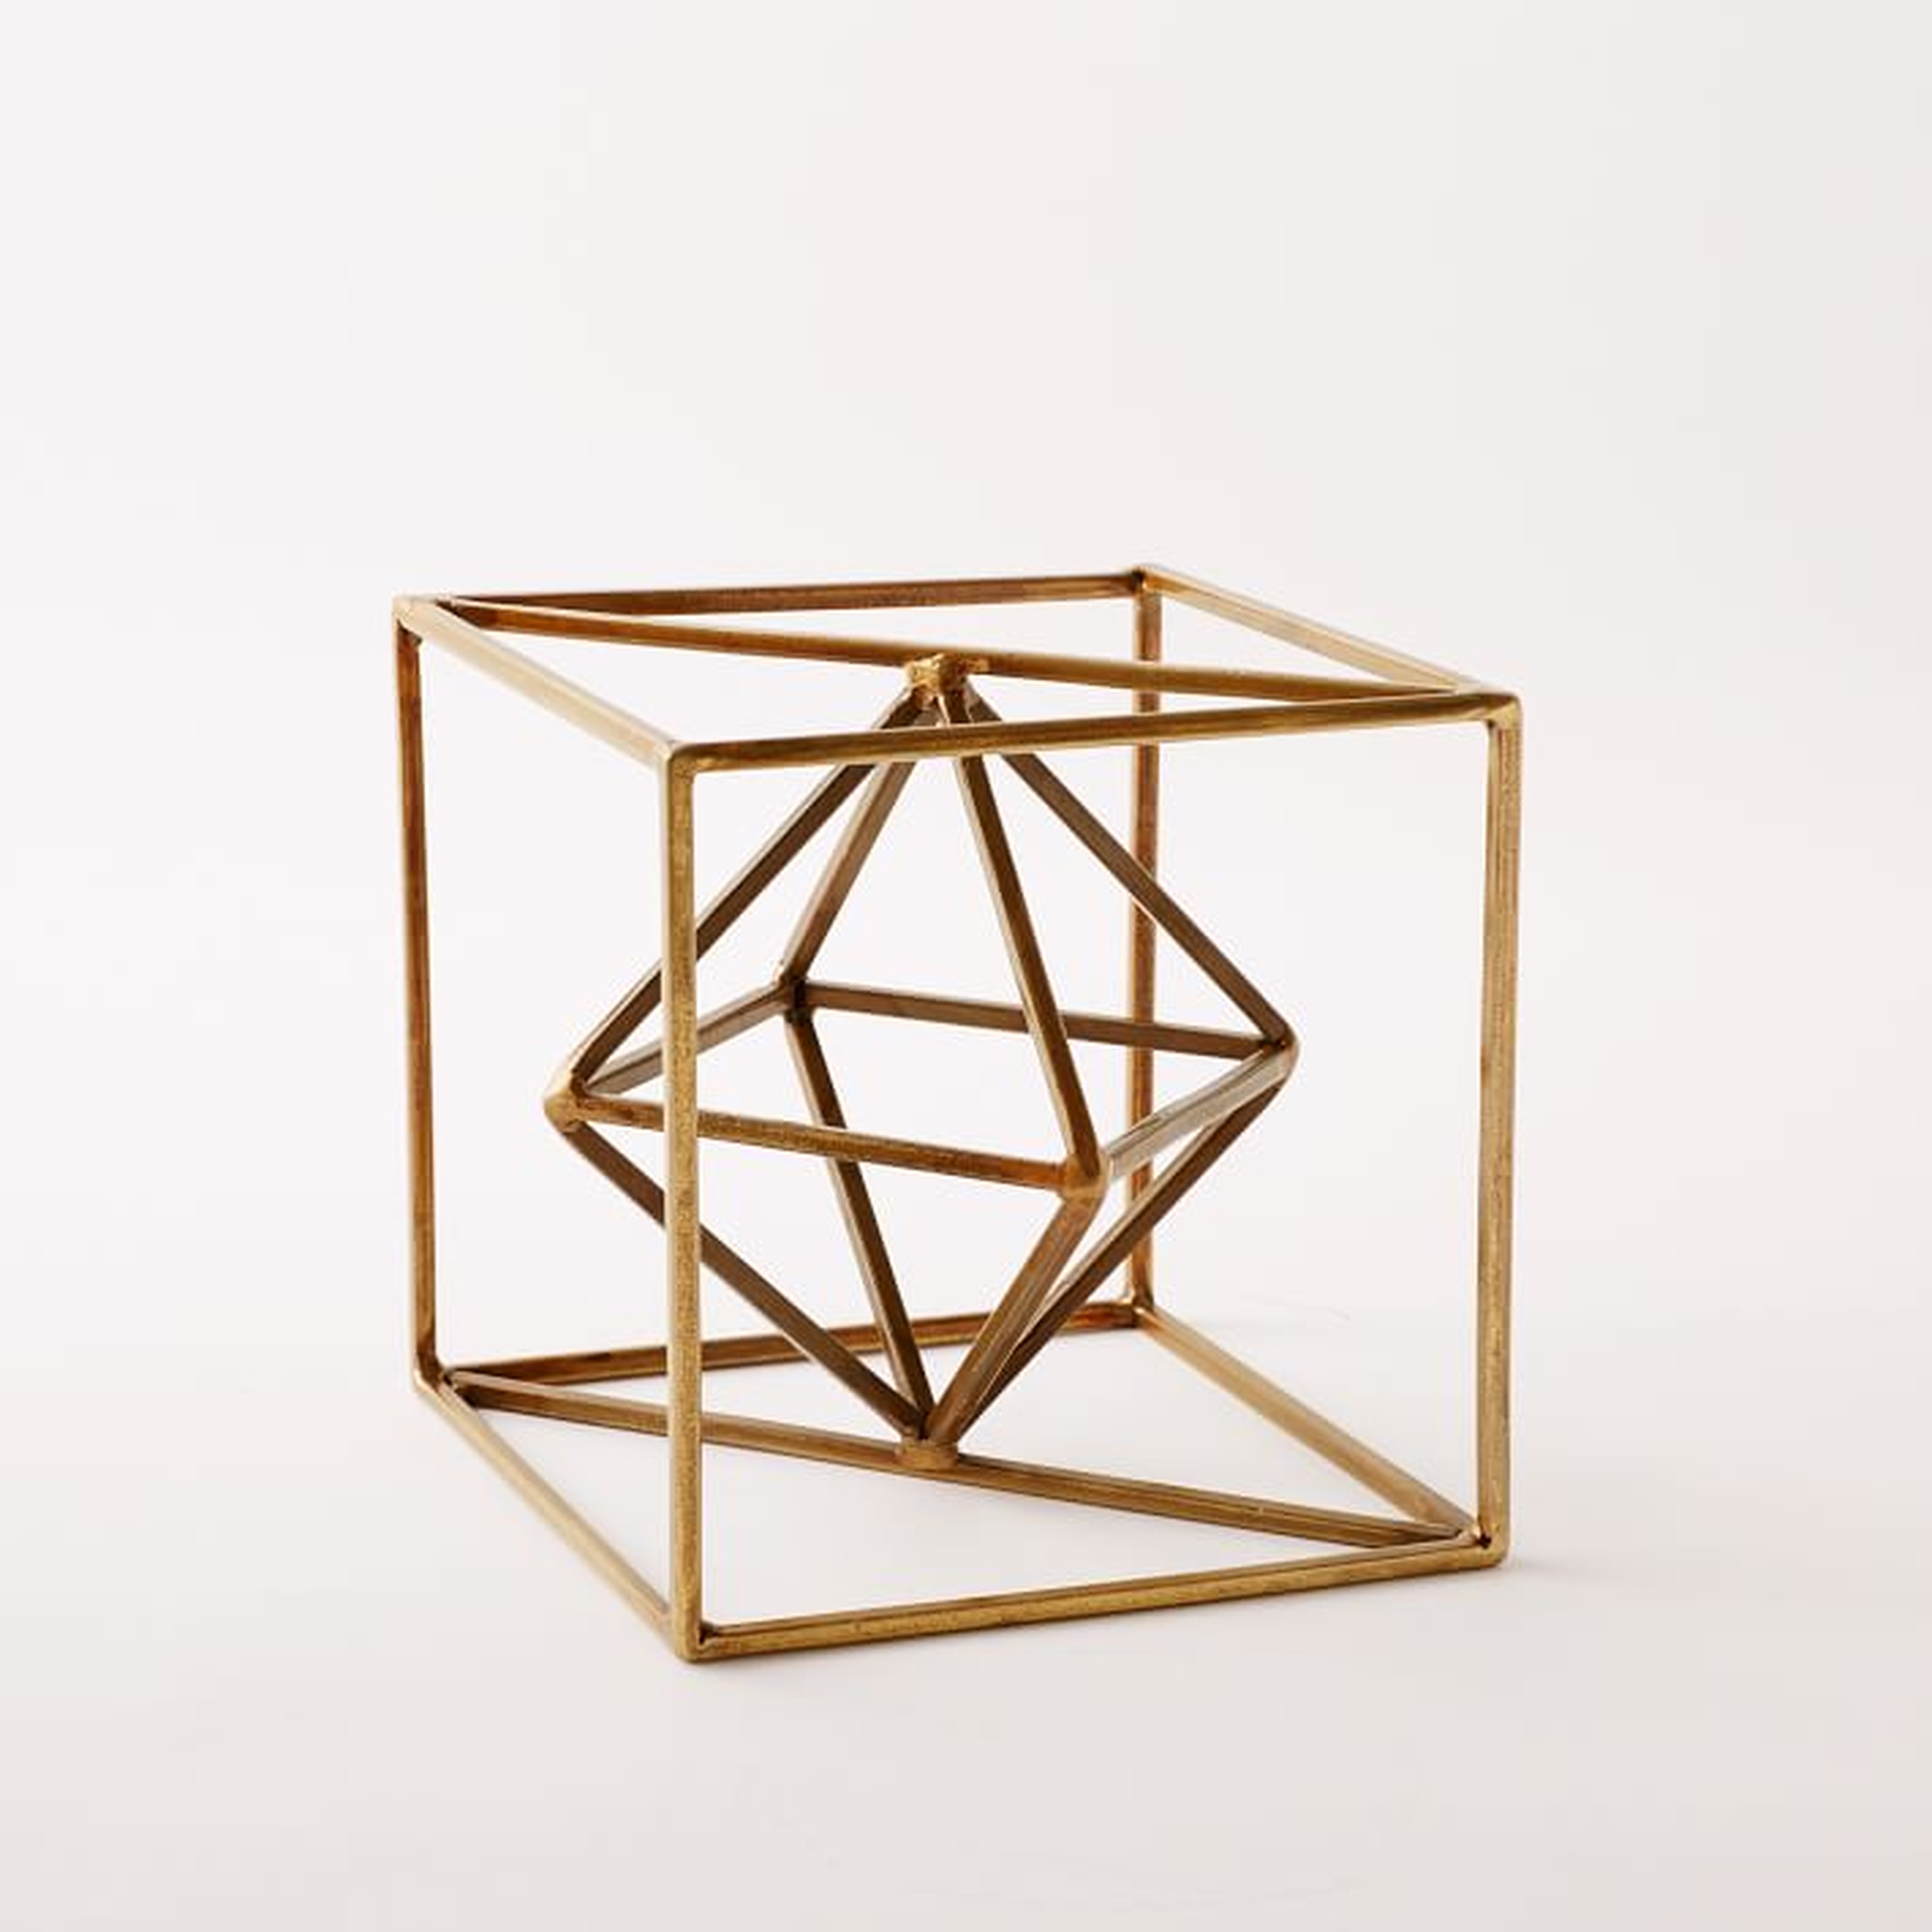 Symmetry Objects - Square - West Elm